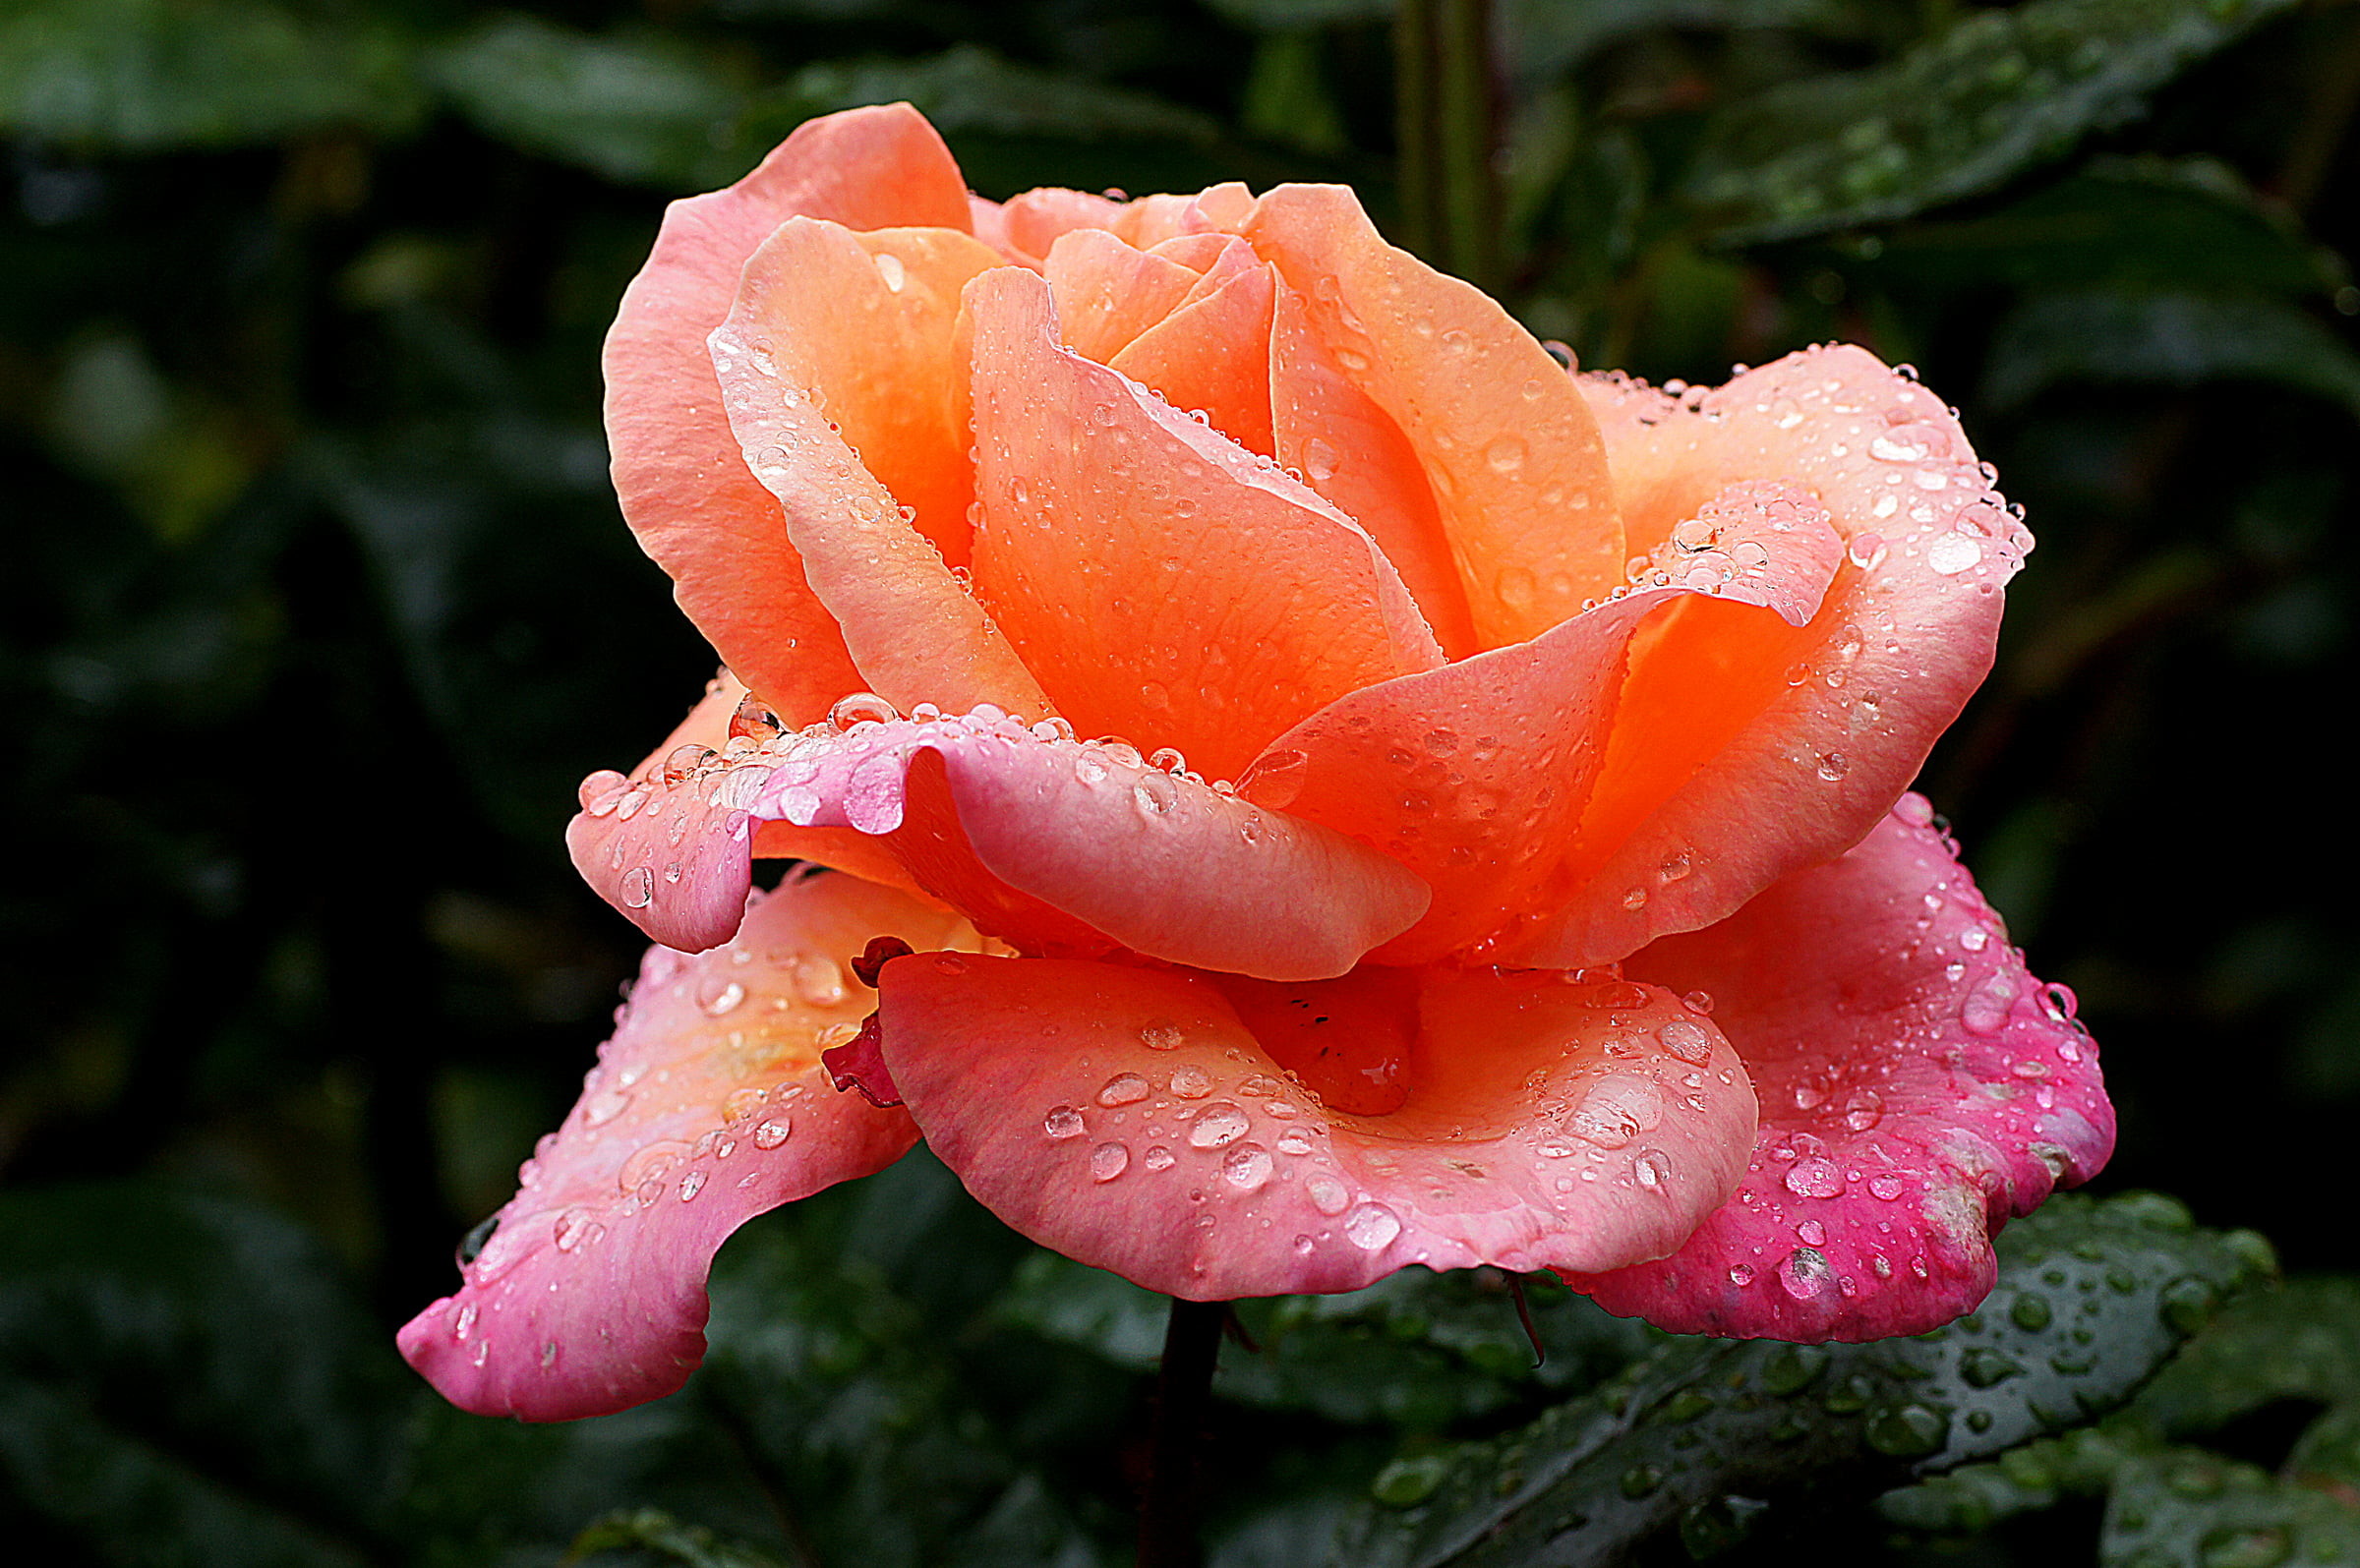 2400x1595 orange and pink Rose flower macro photo